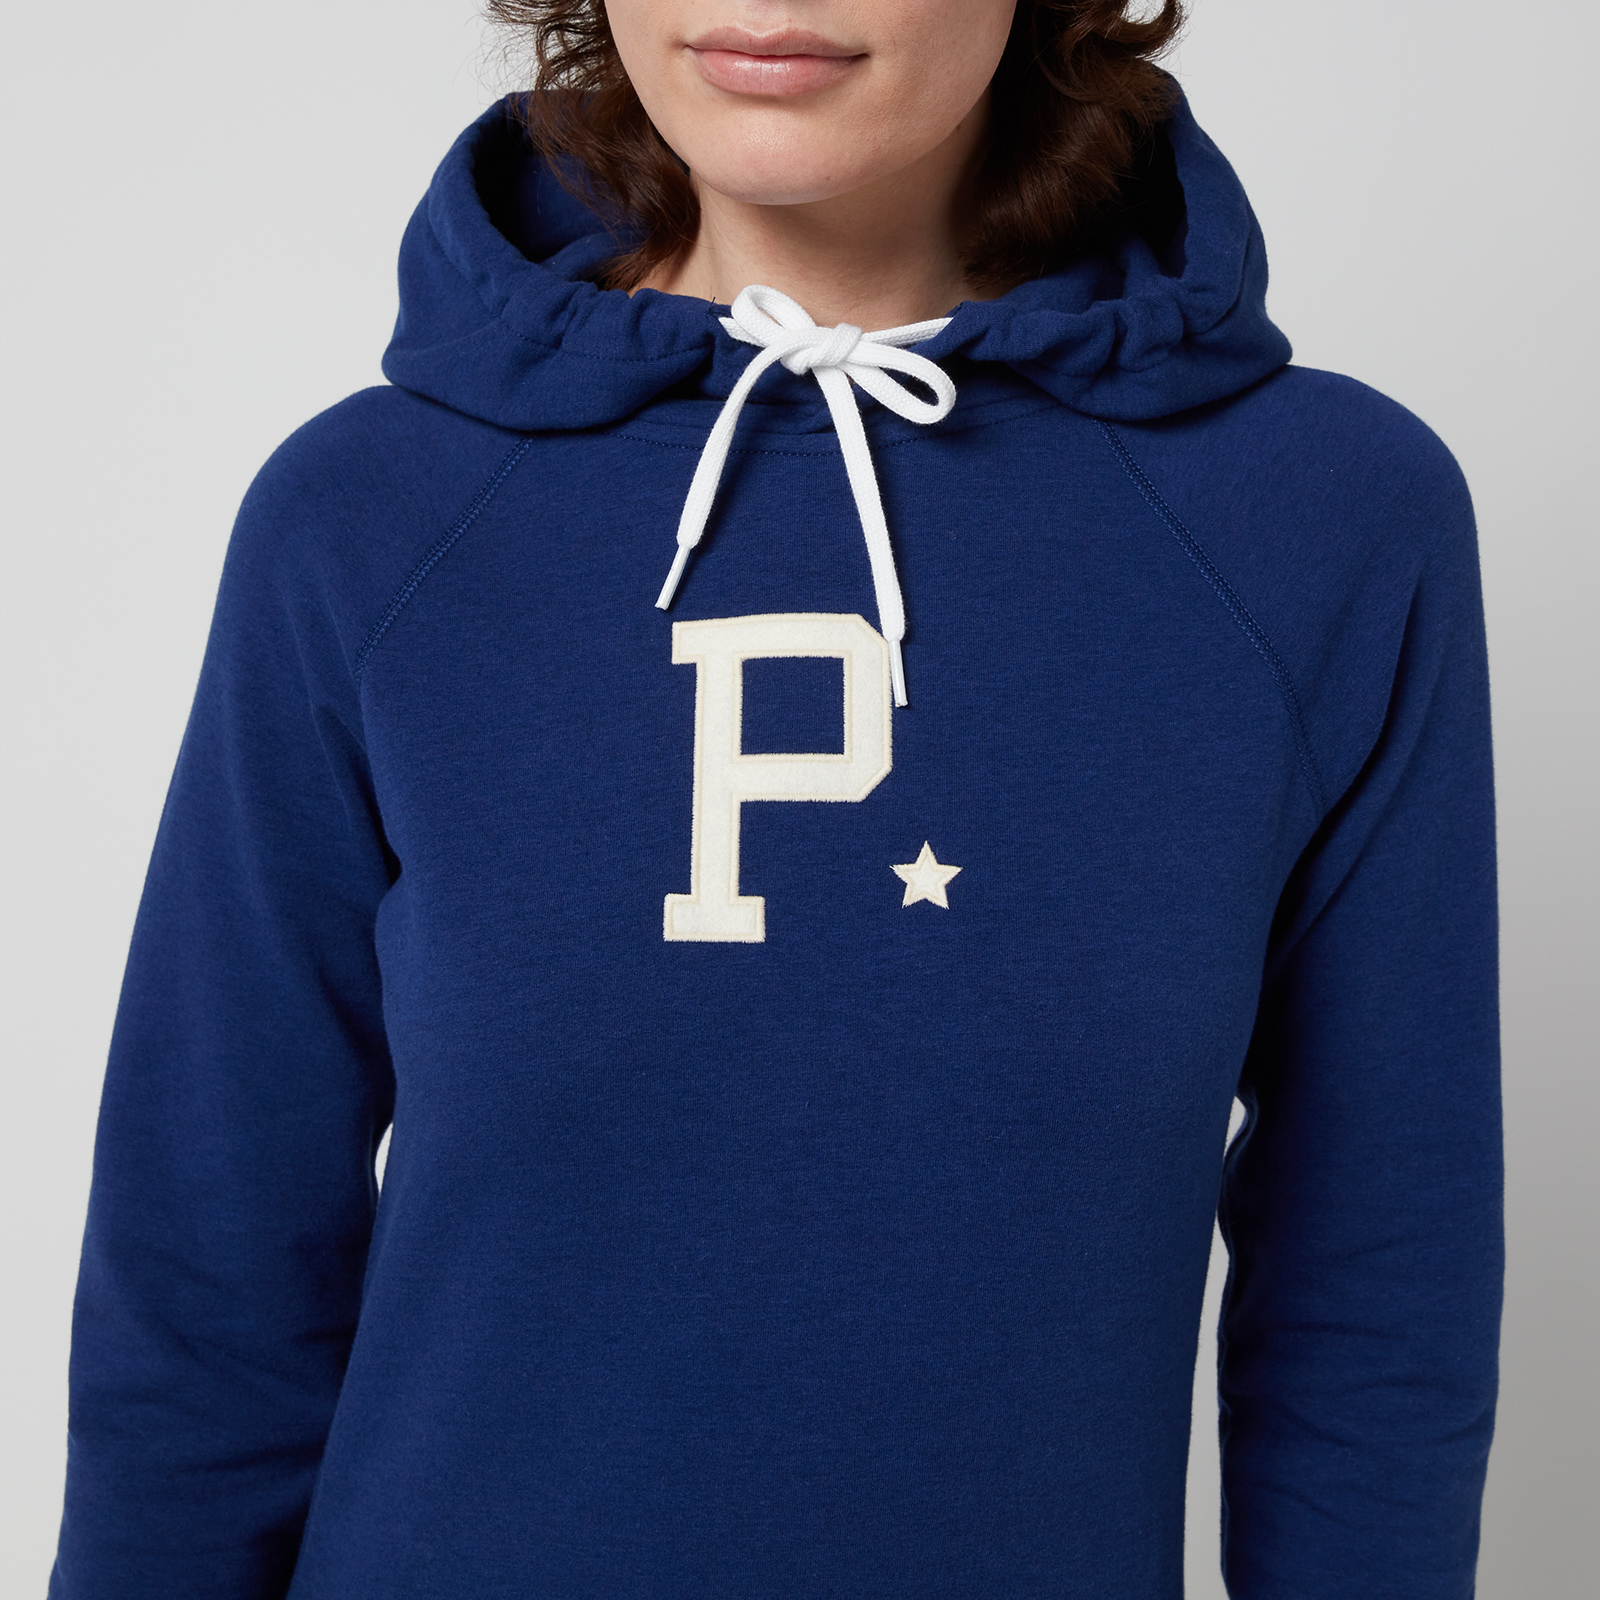 POLO RALPH LAUREN Hooded Sweatshirt Girl 9-16 years online